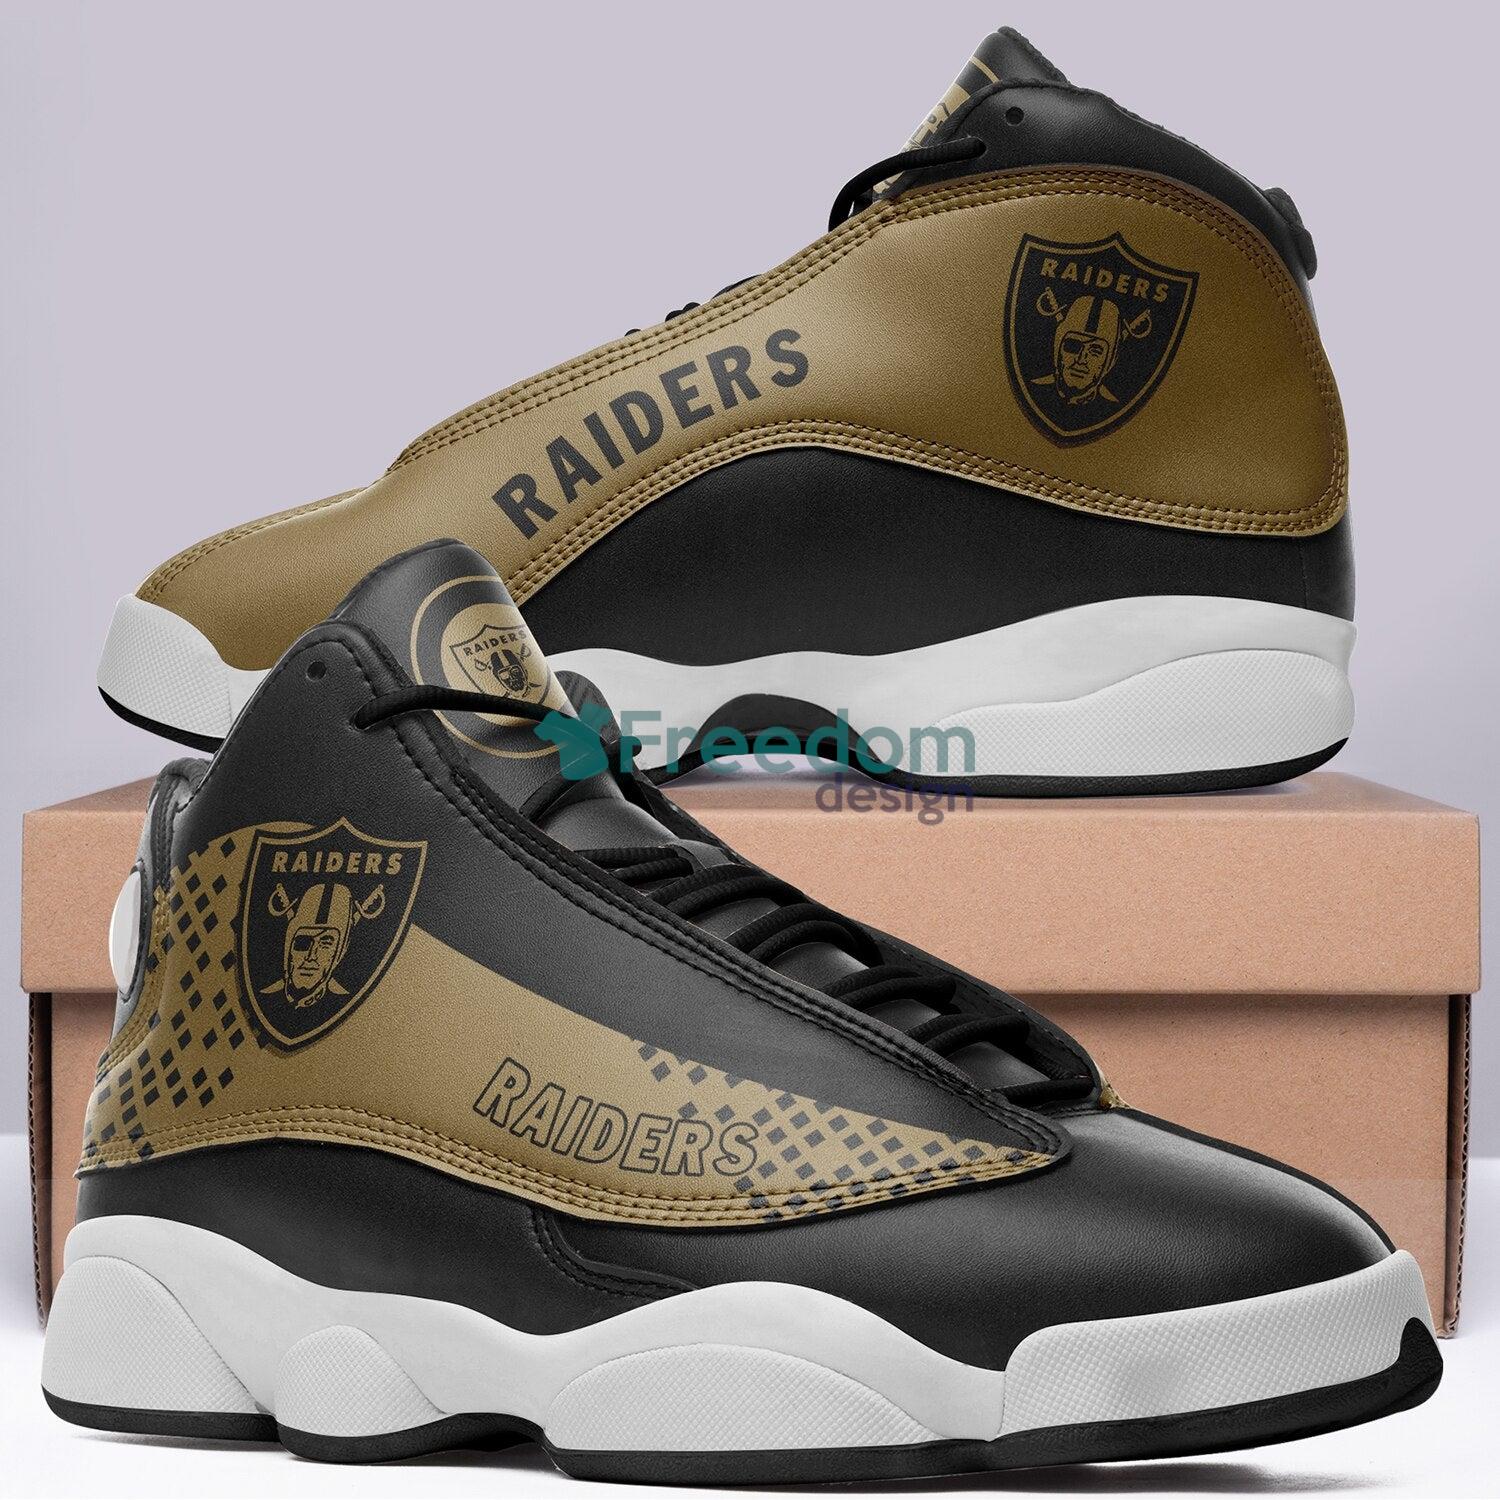 Las Vegas Raiders Sport Team Air Jordan 13 Sneaker Shoes For Fans